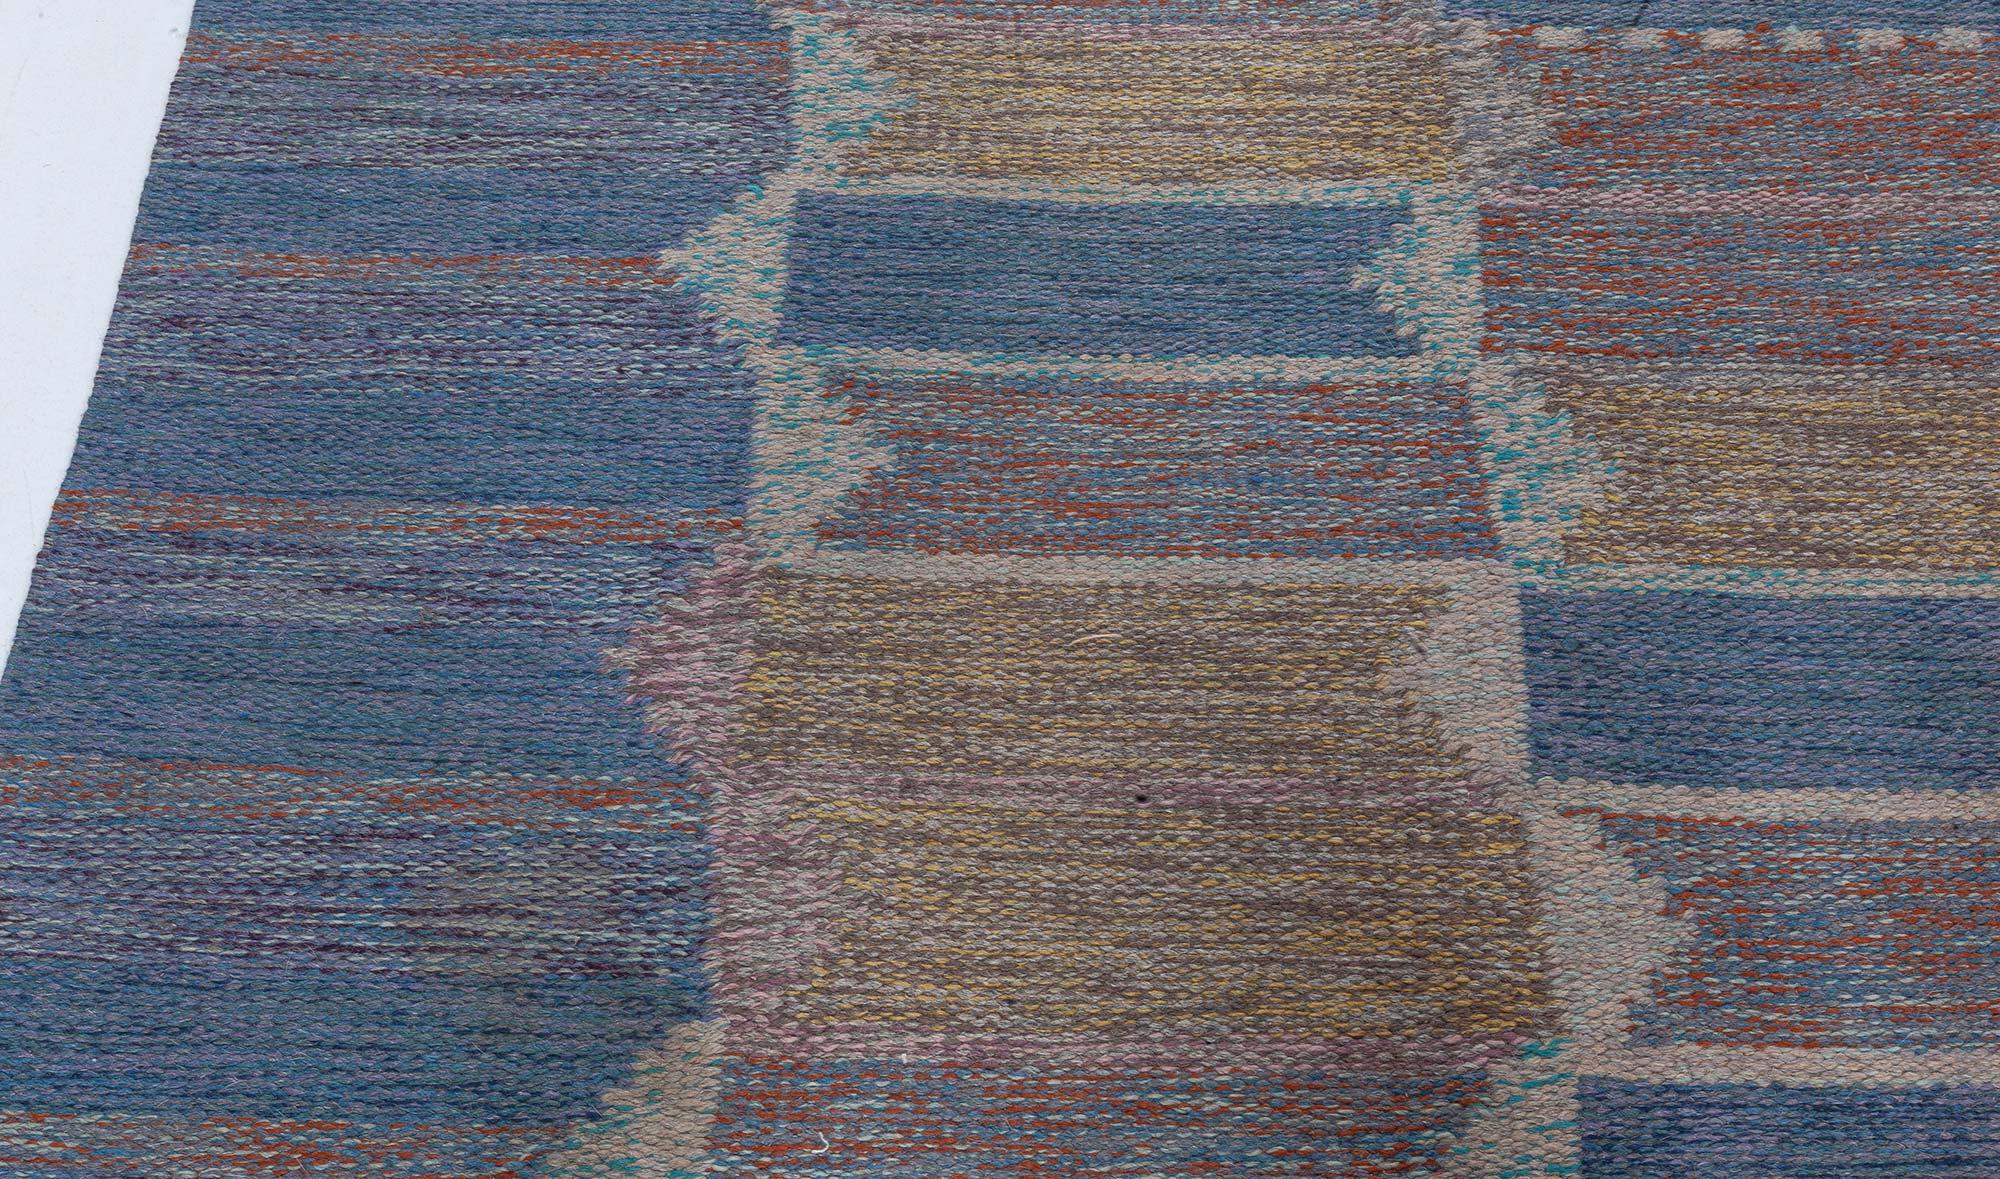 Vintage Swedish flat woven rug
Size: 6'0